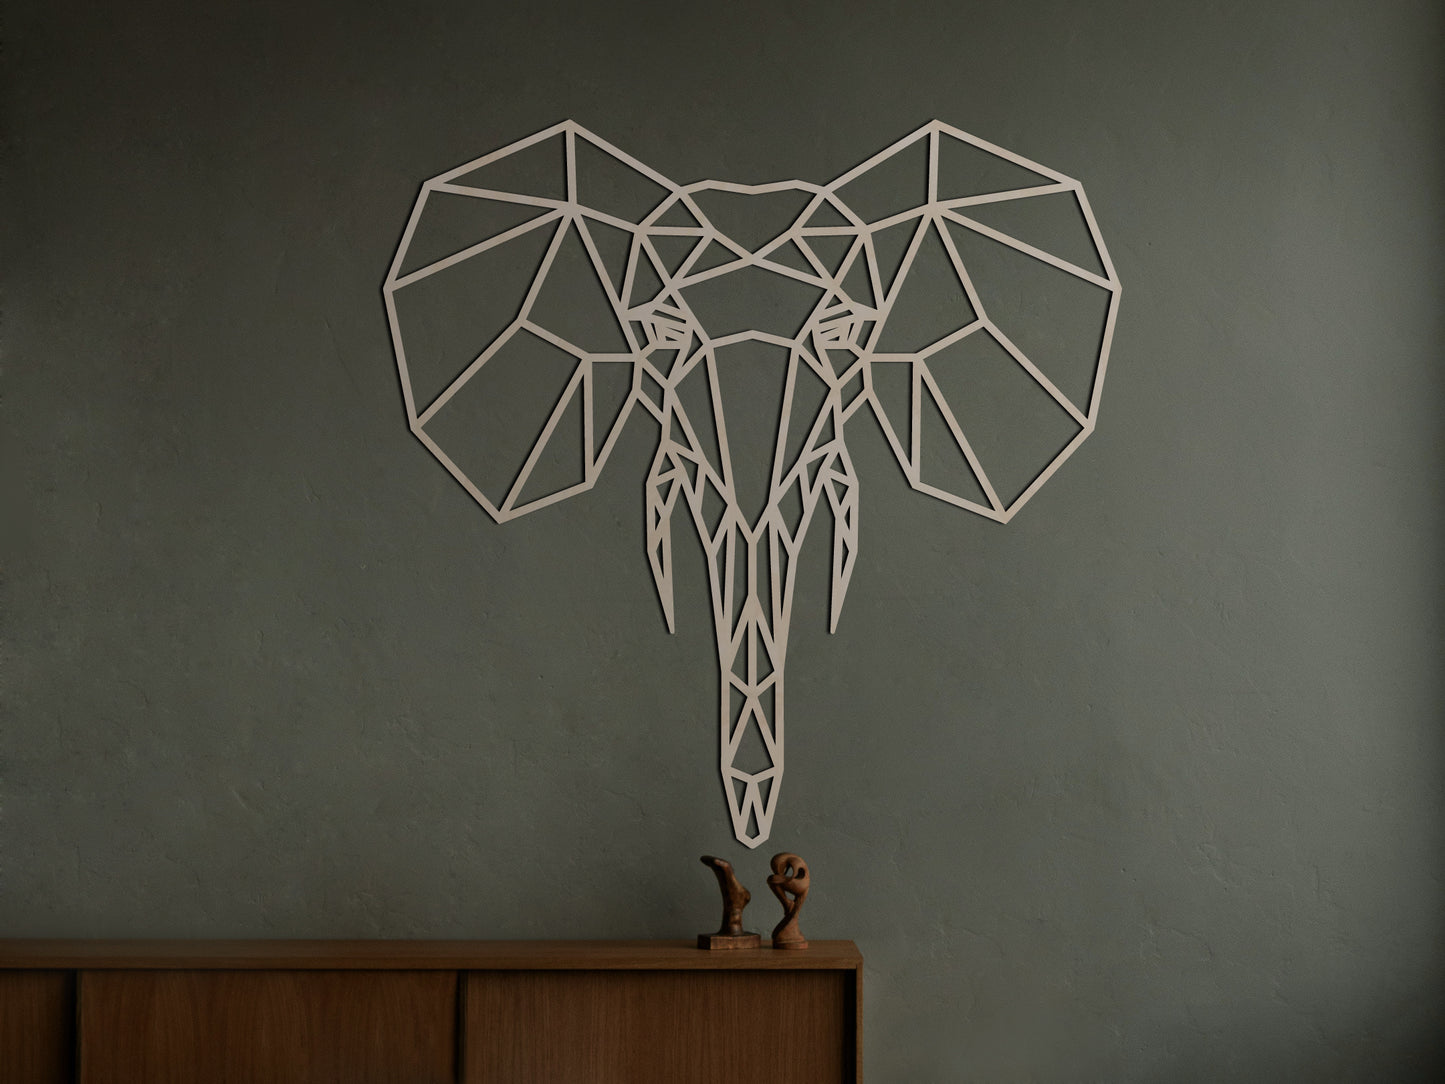 Houten wanddecoratie - Geometrische Olifant